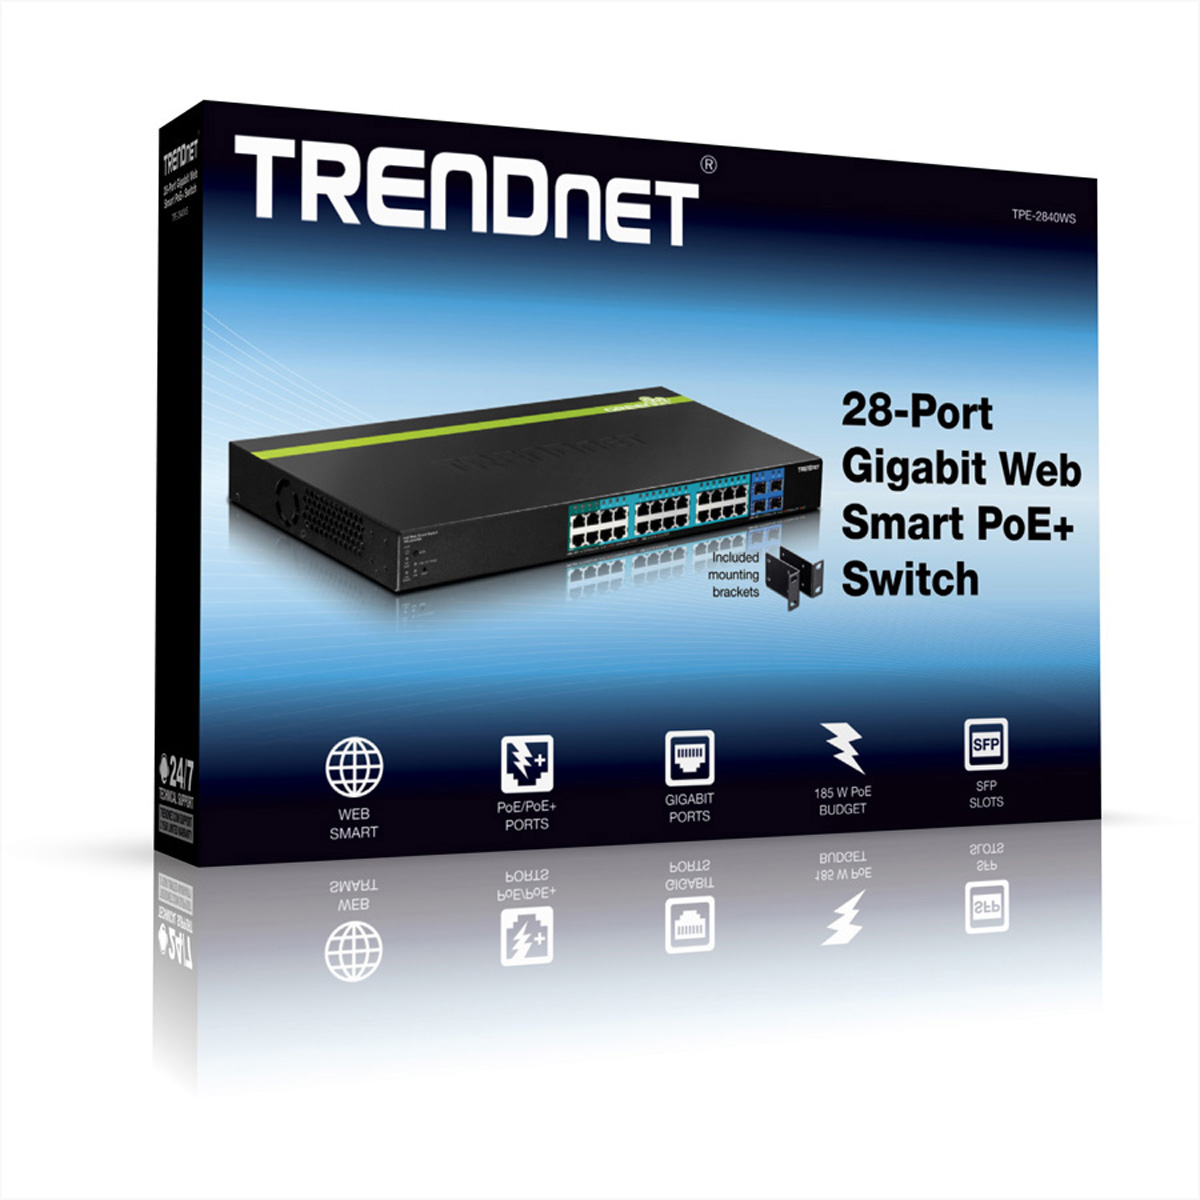 SFP PoE/PoE+ Switch TRENDNET 4 PoE POE+ 28-Port 195W Gigabit TPE-2840WS 24 Switch Smart Gigabit